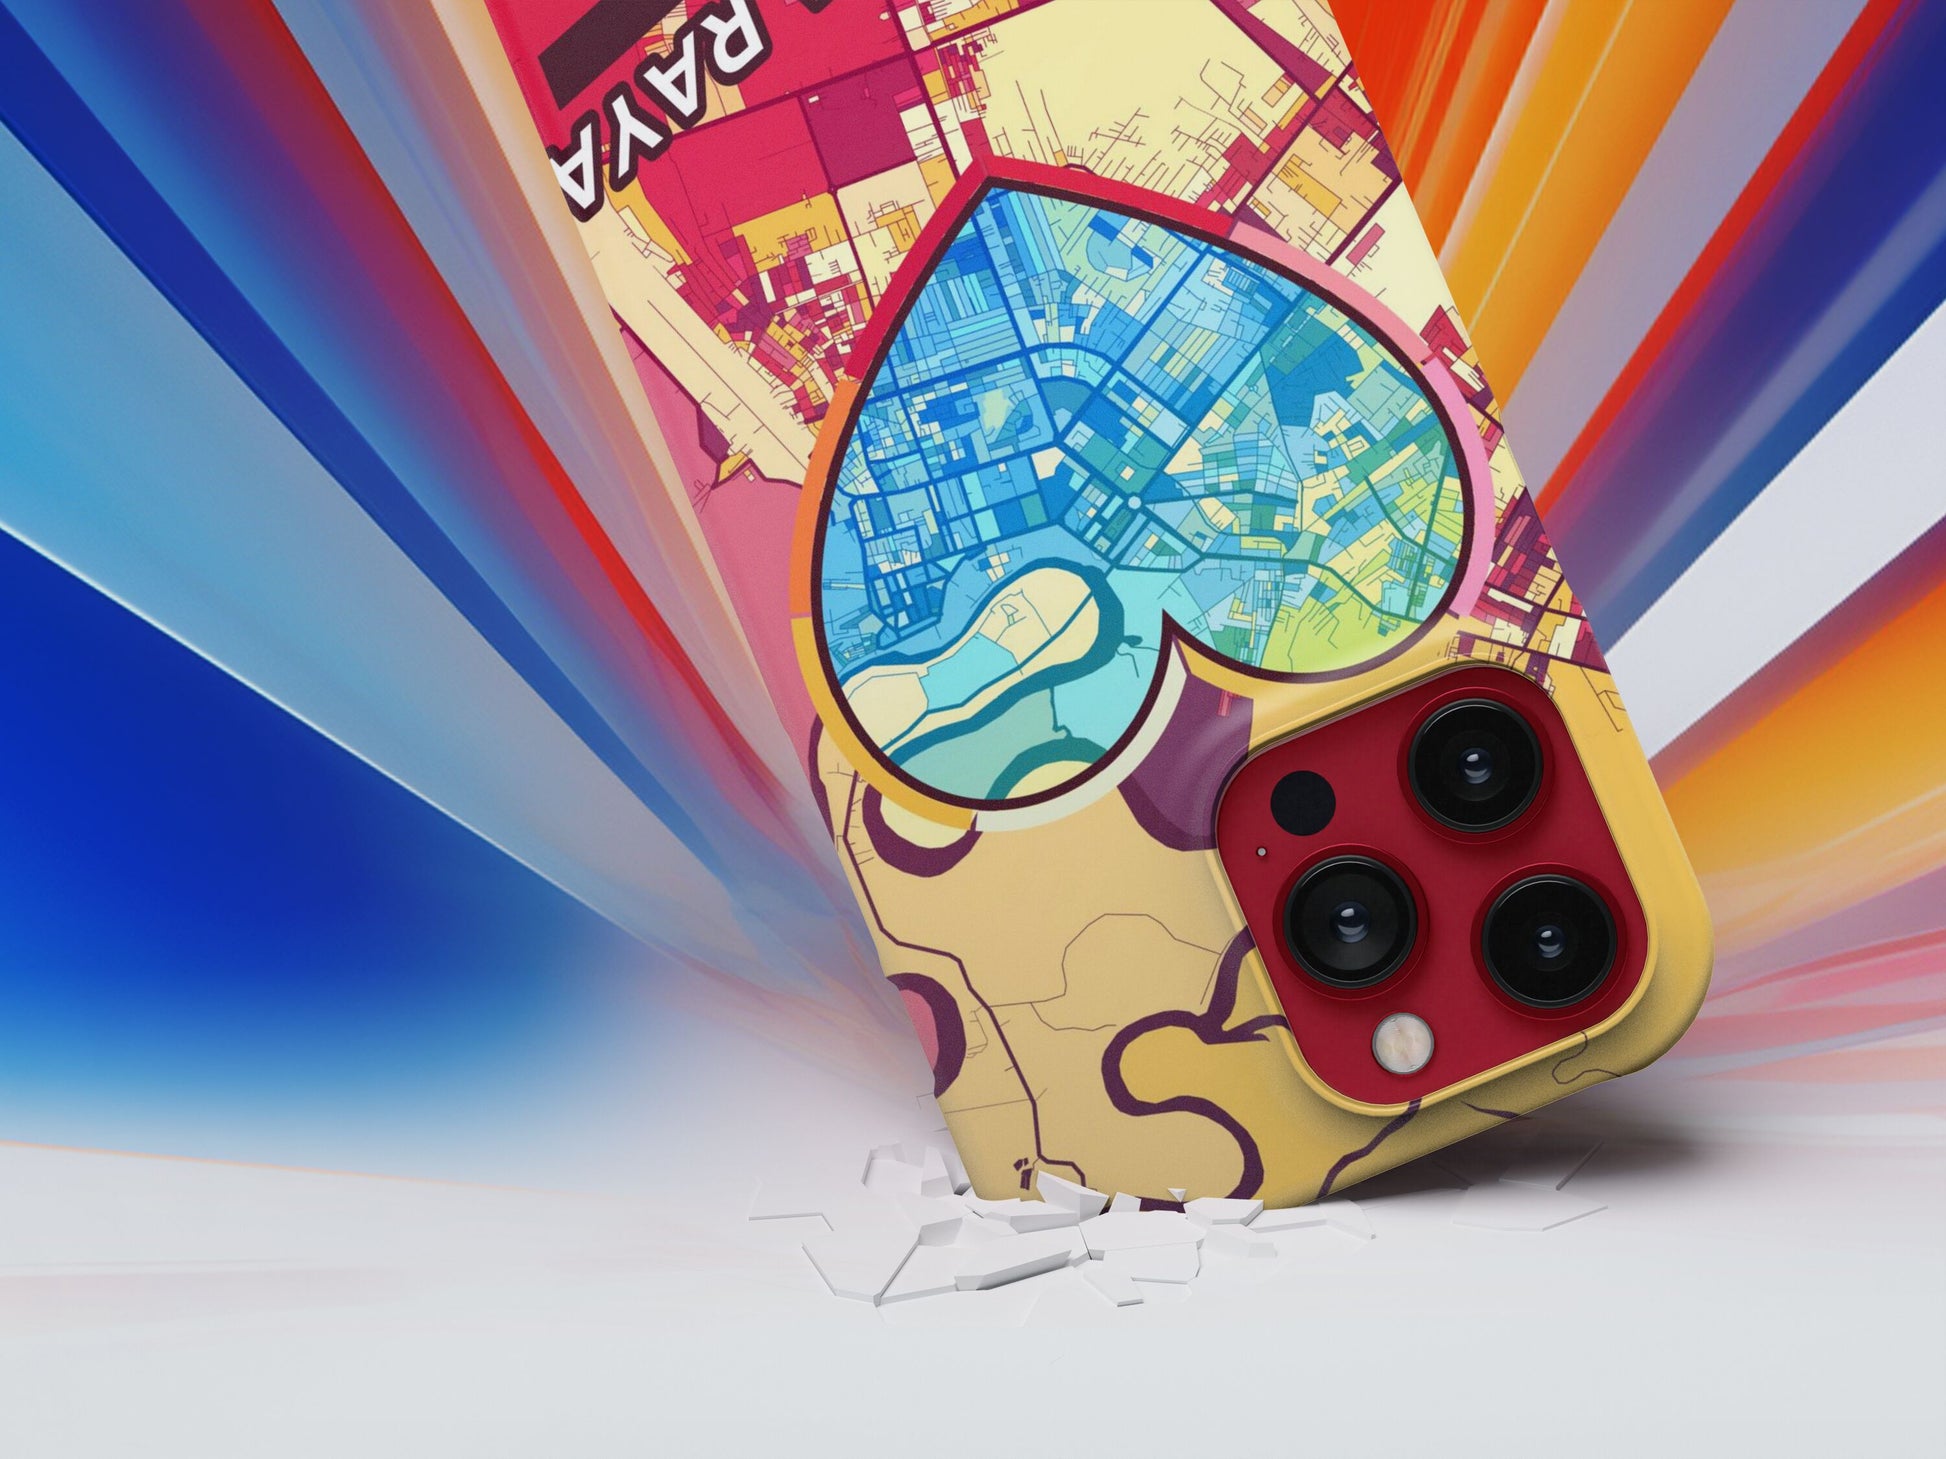 Palangka Raya Indonesia slim phone case with colorful icon